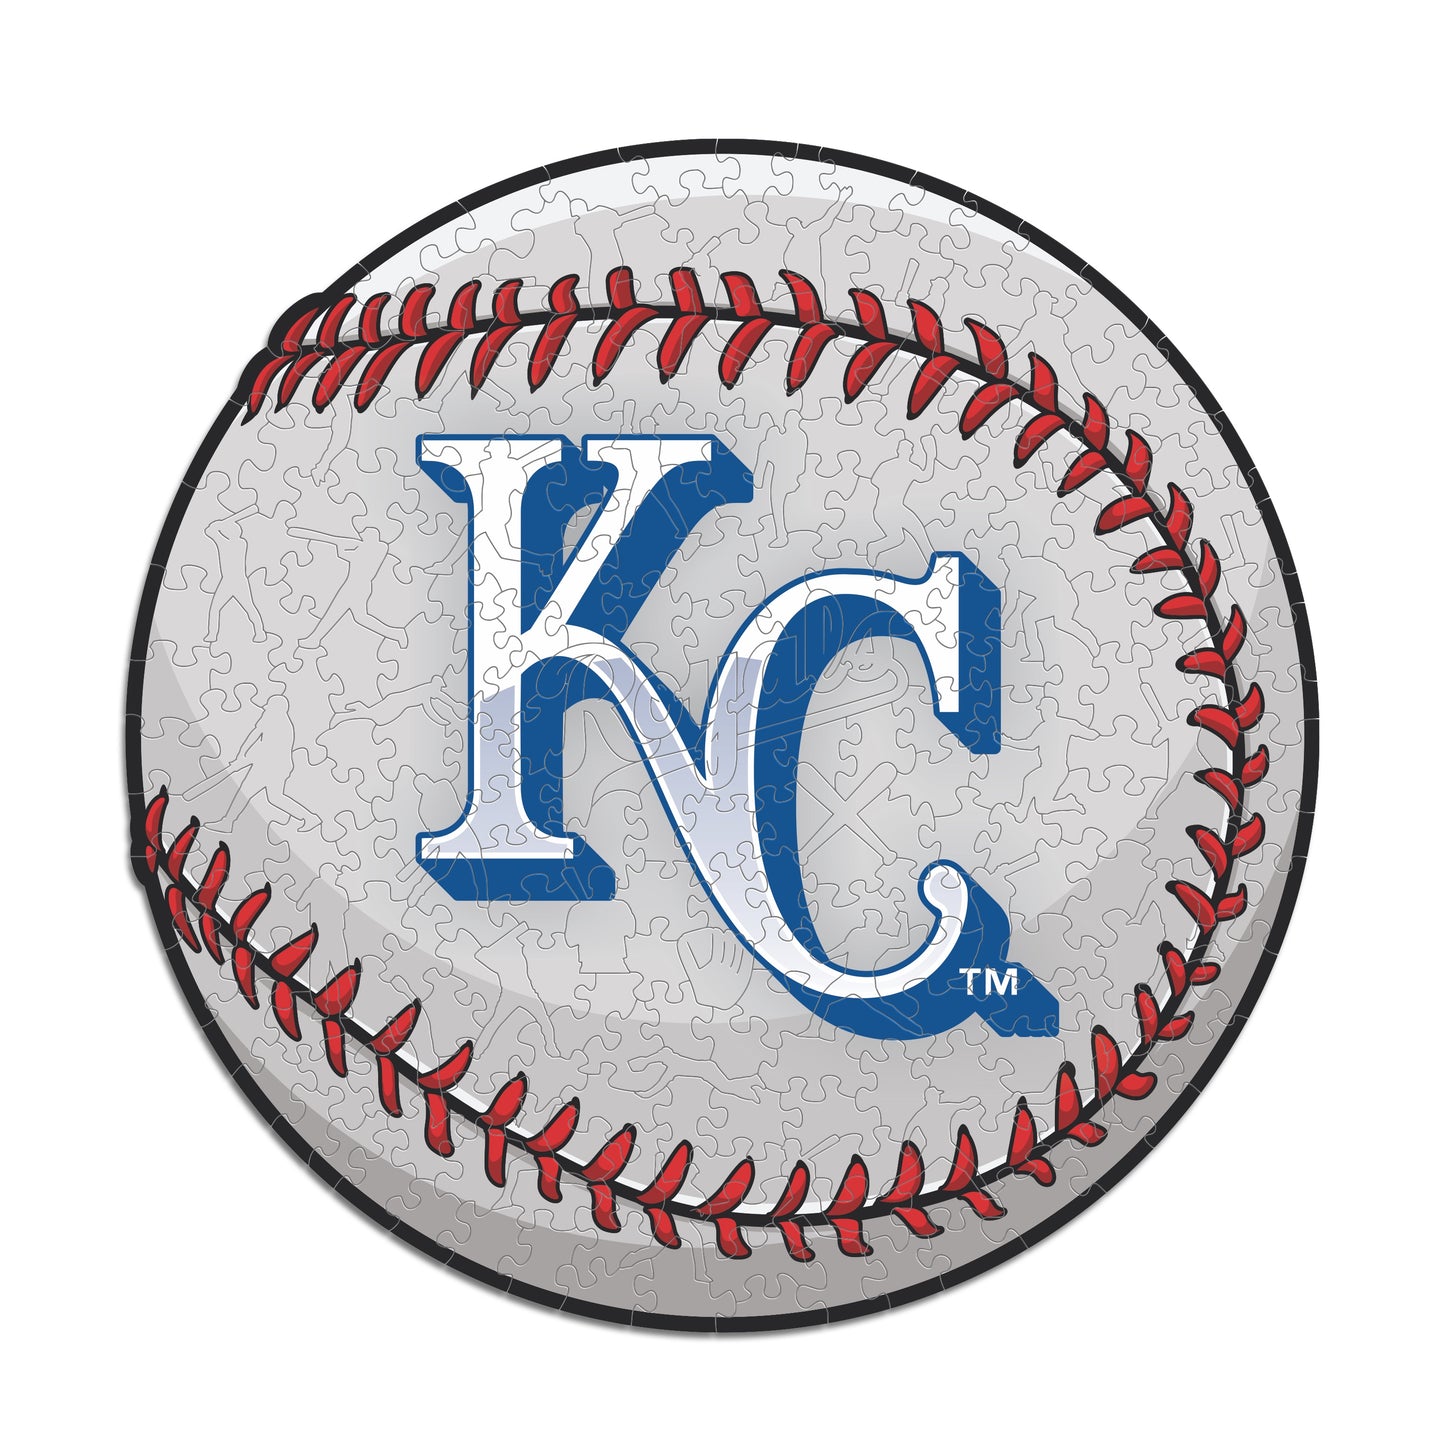 Kansas City Royals™ - Wooden Puzzle